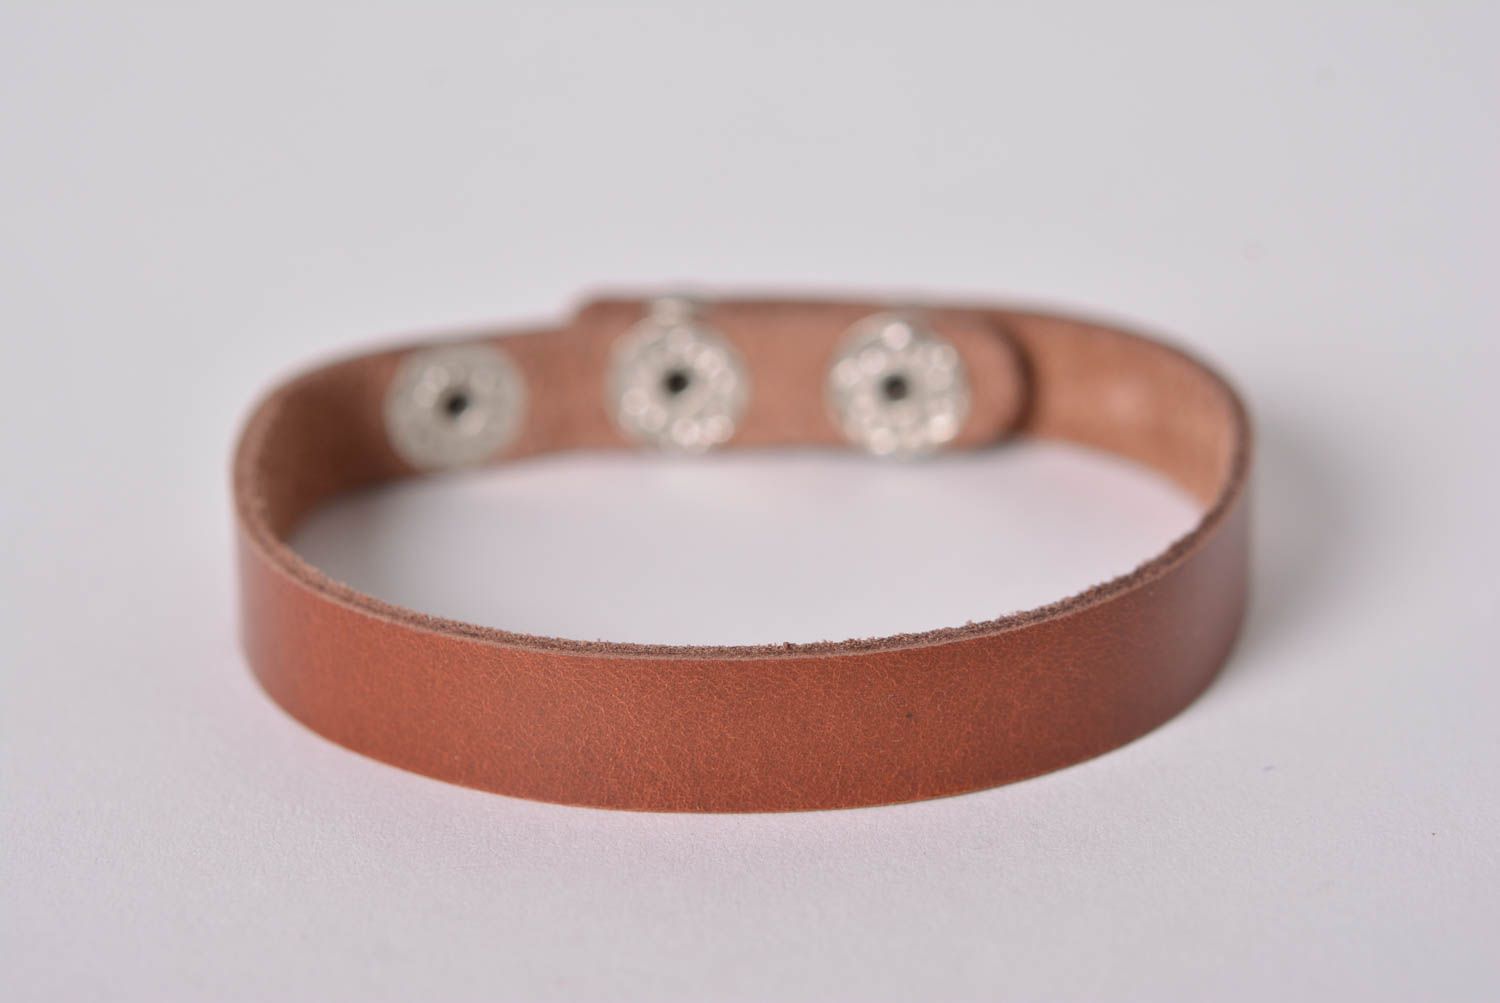 Unusual handmade leather bracelet fashion accessories unisex jewelry gift ideas photo 1